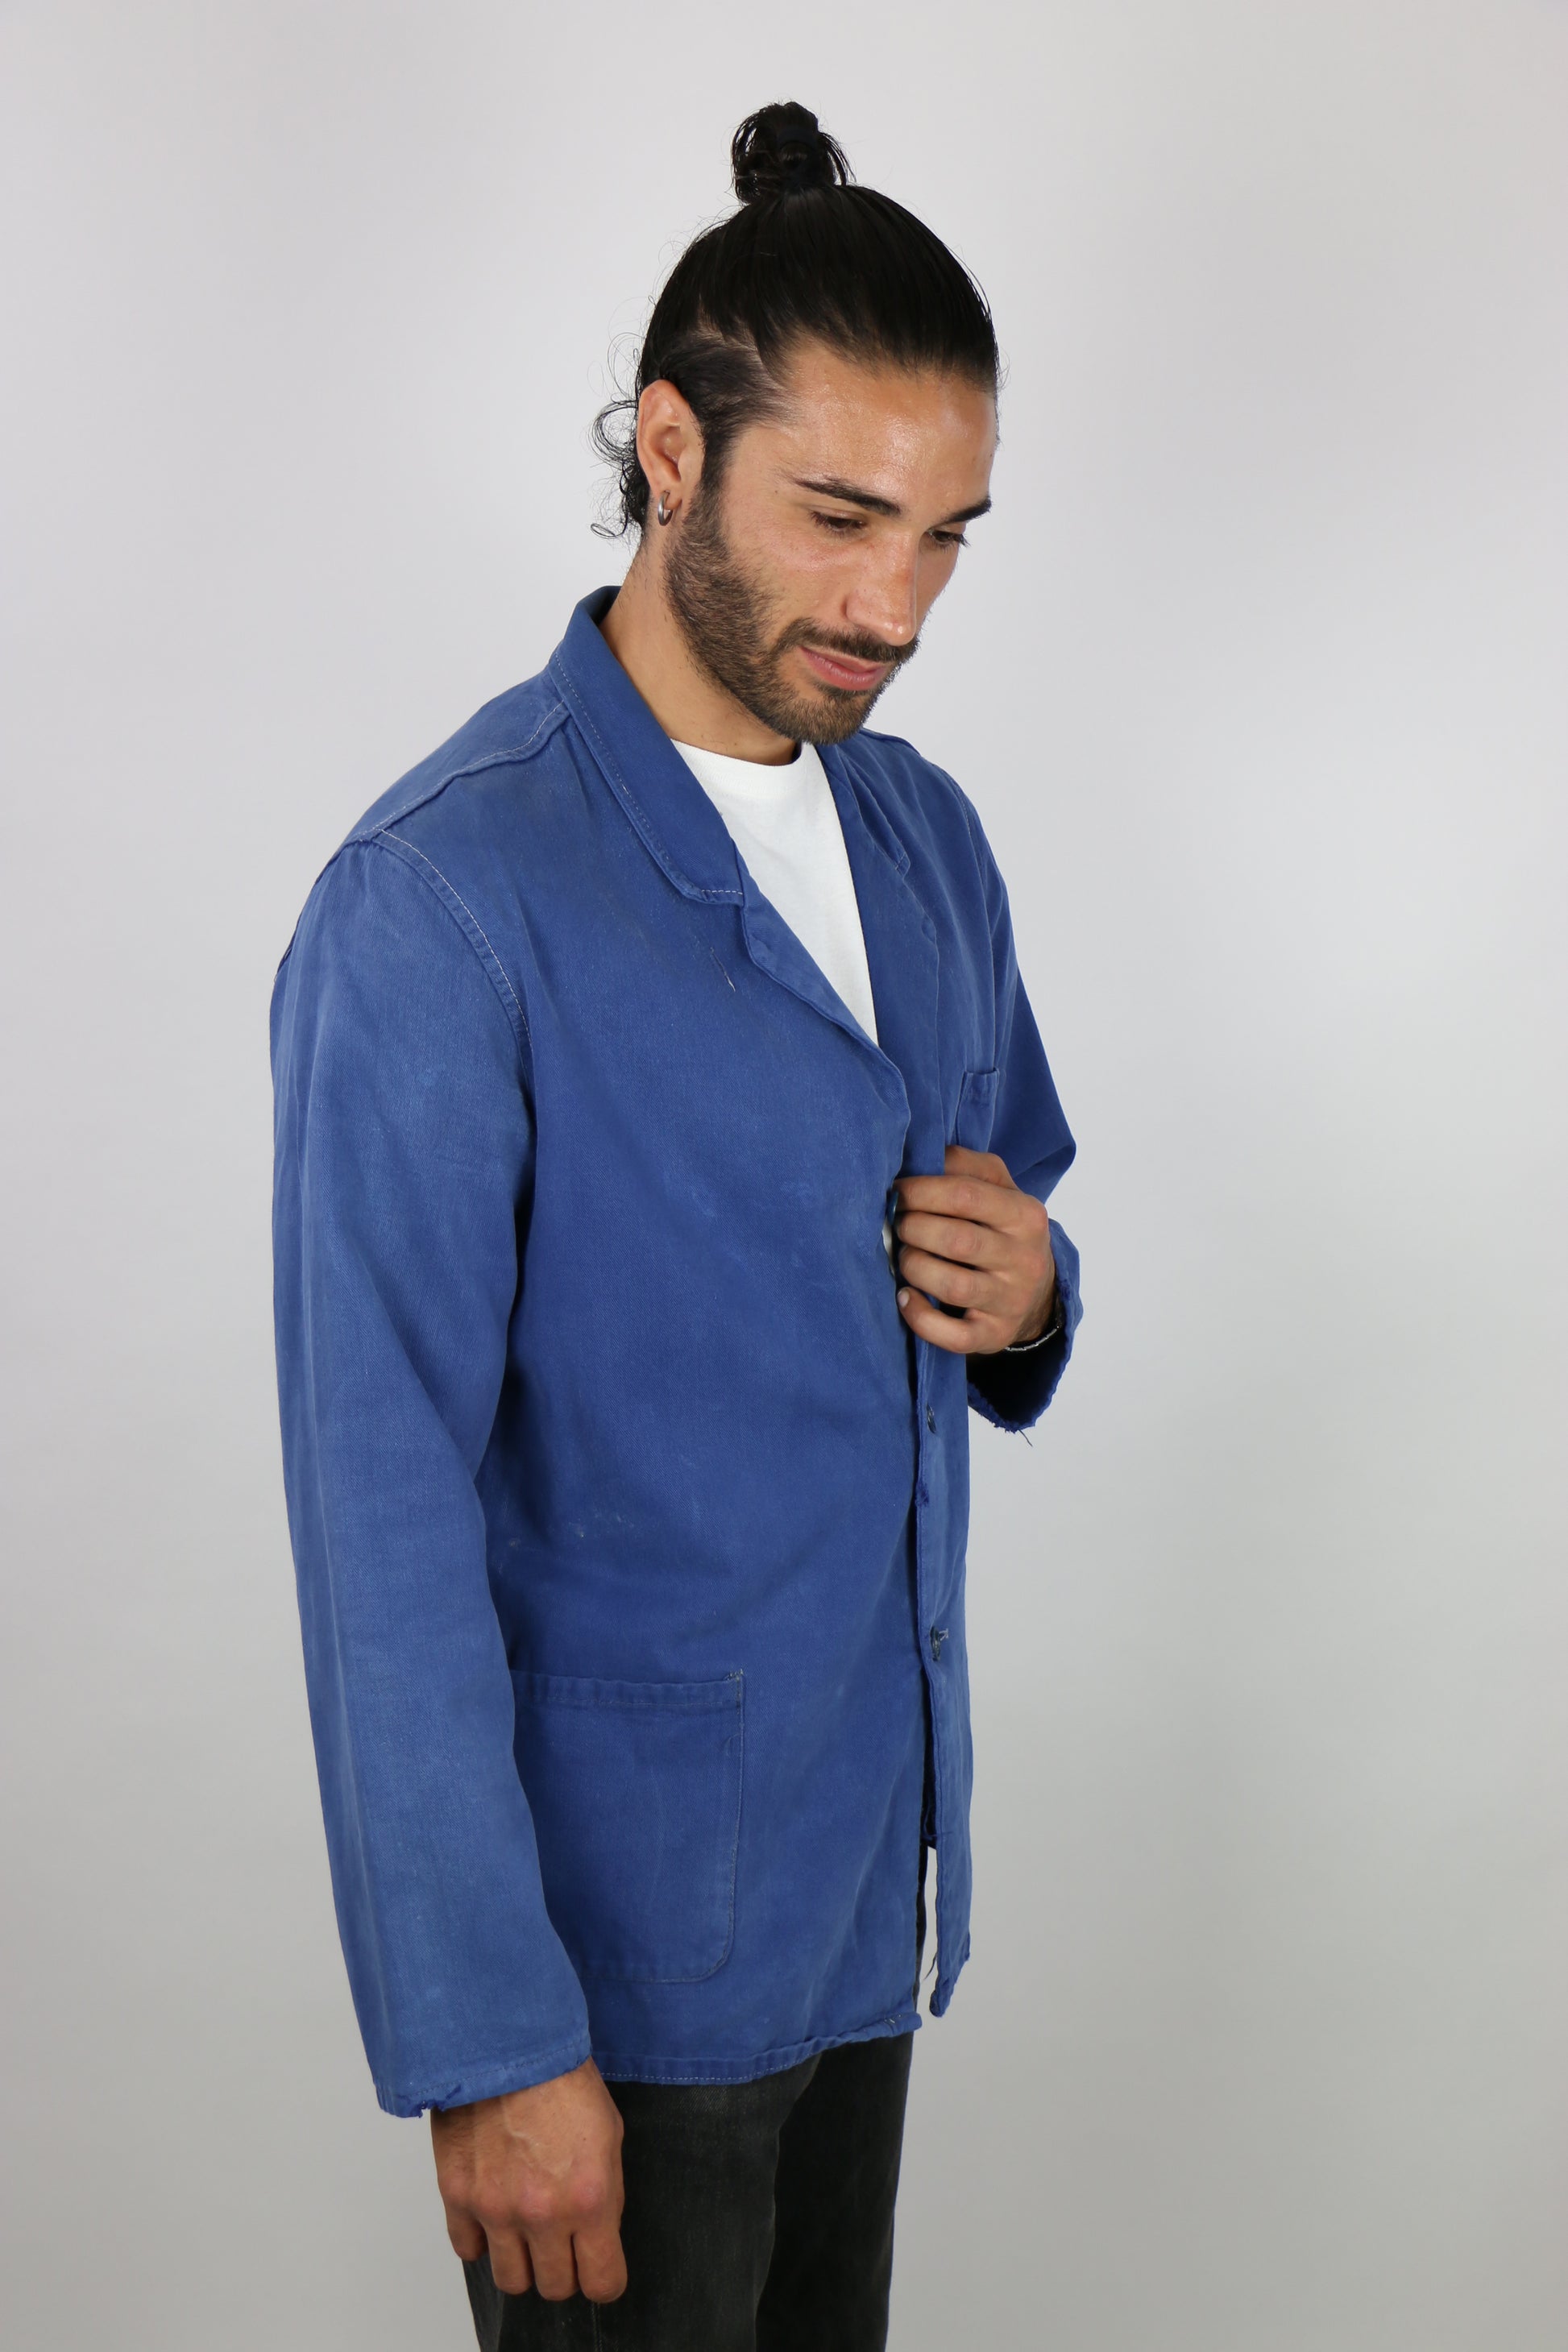 French Work Jacket - vintage clothing clochard92.com